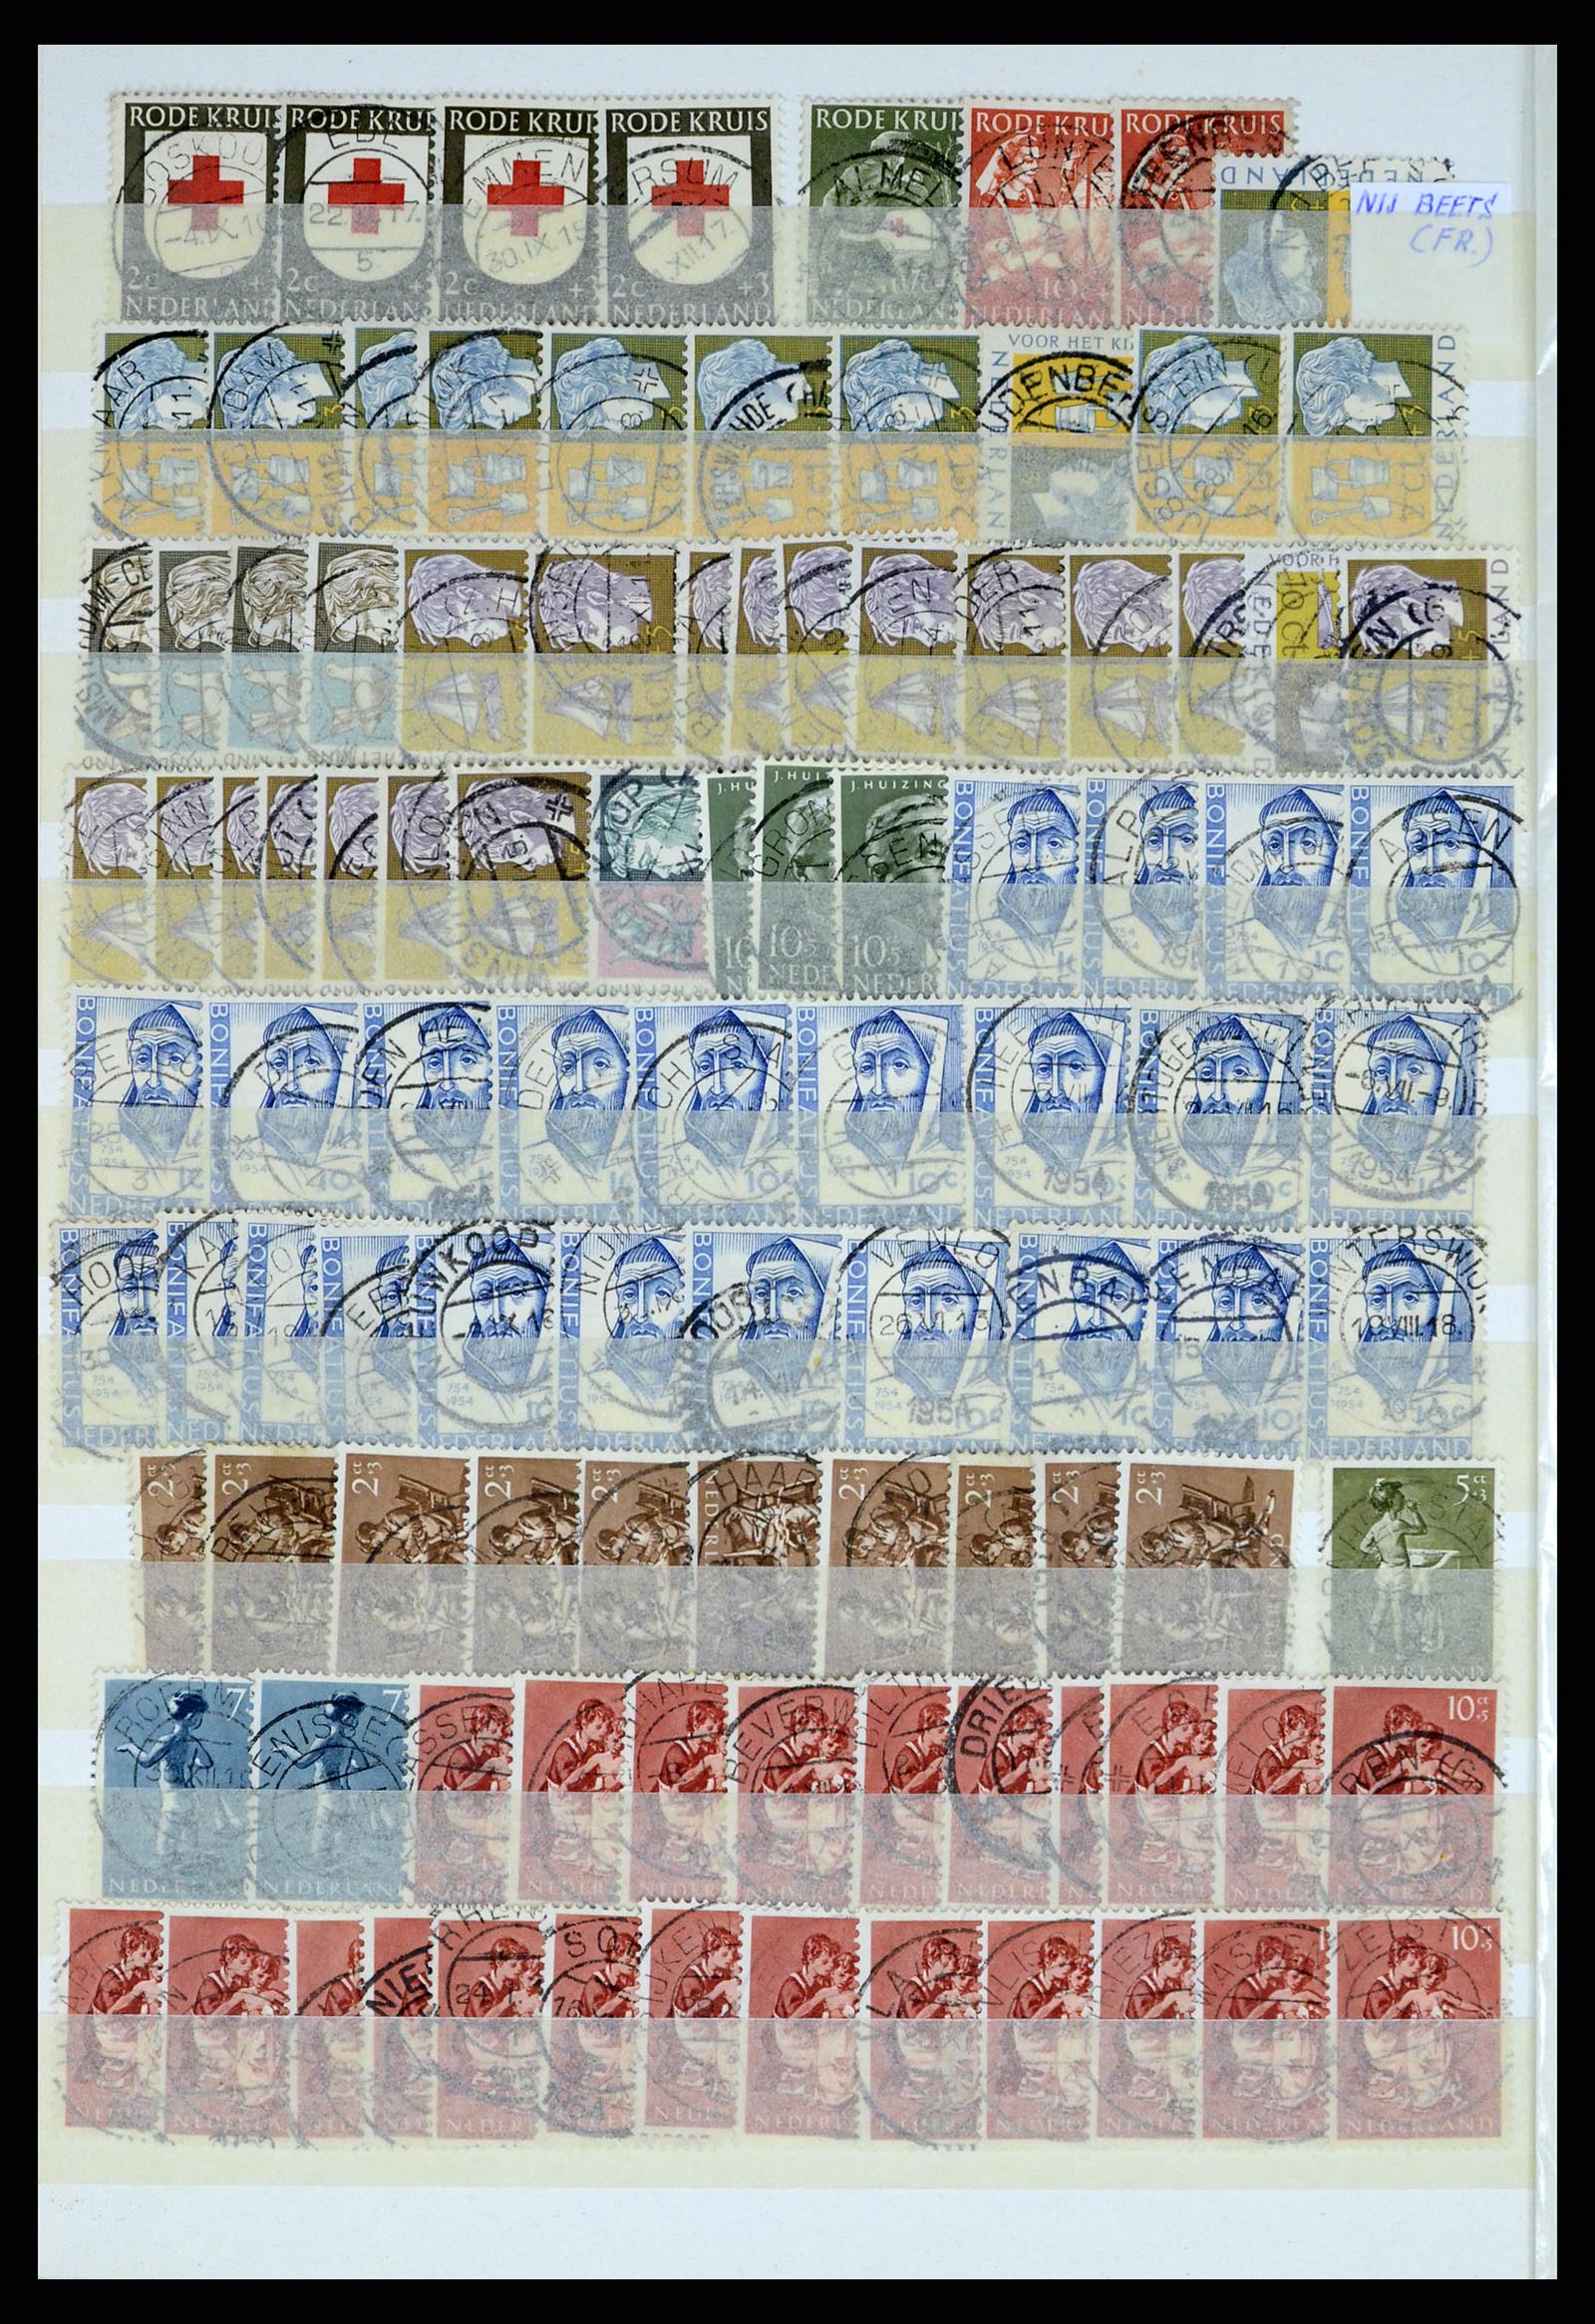 37424 048 - Stamp collection 37424 Netherlands shortbar cancels.